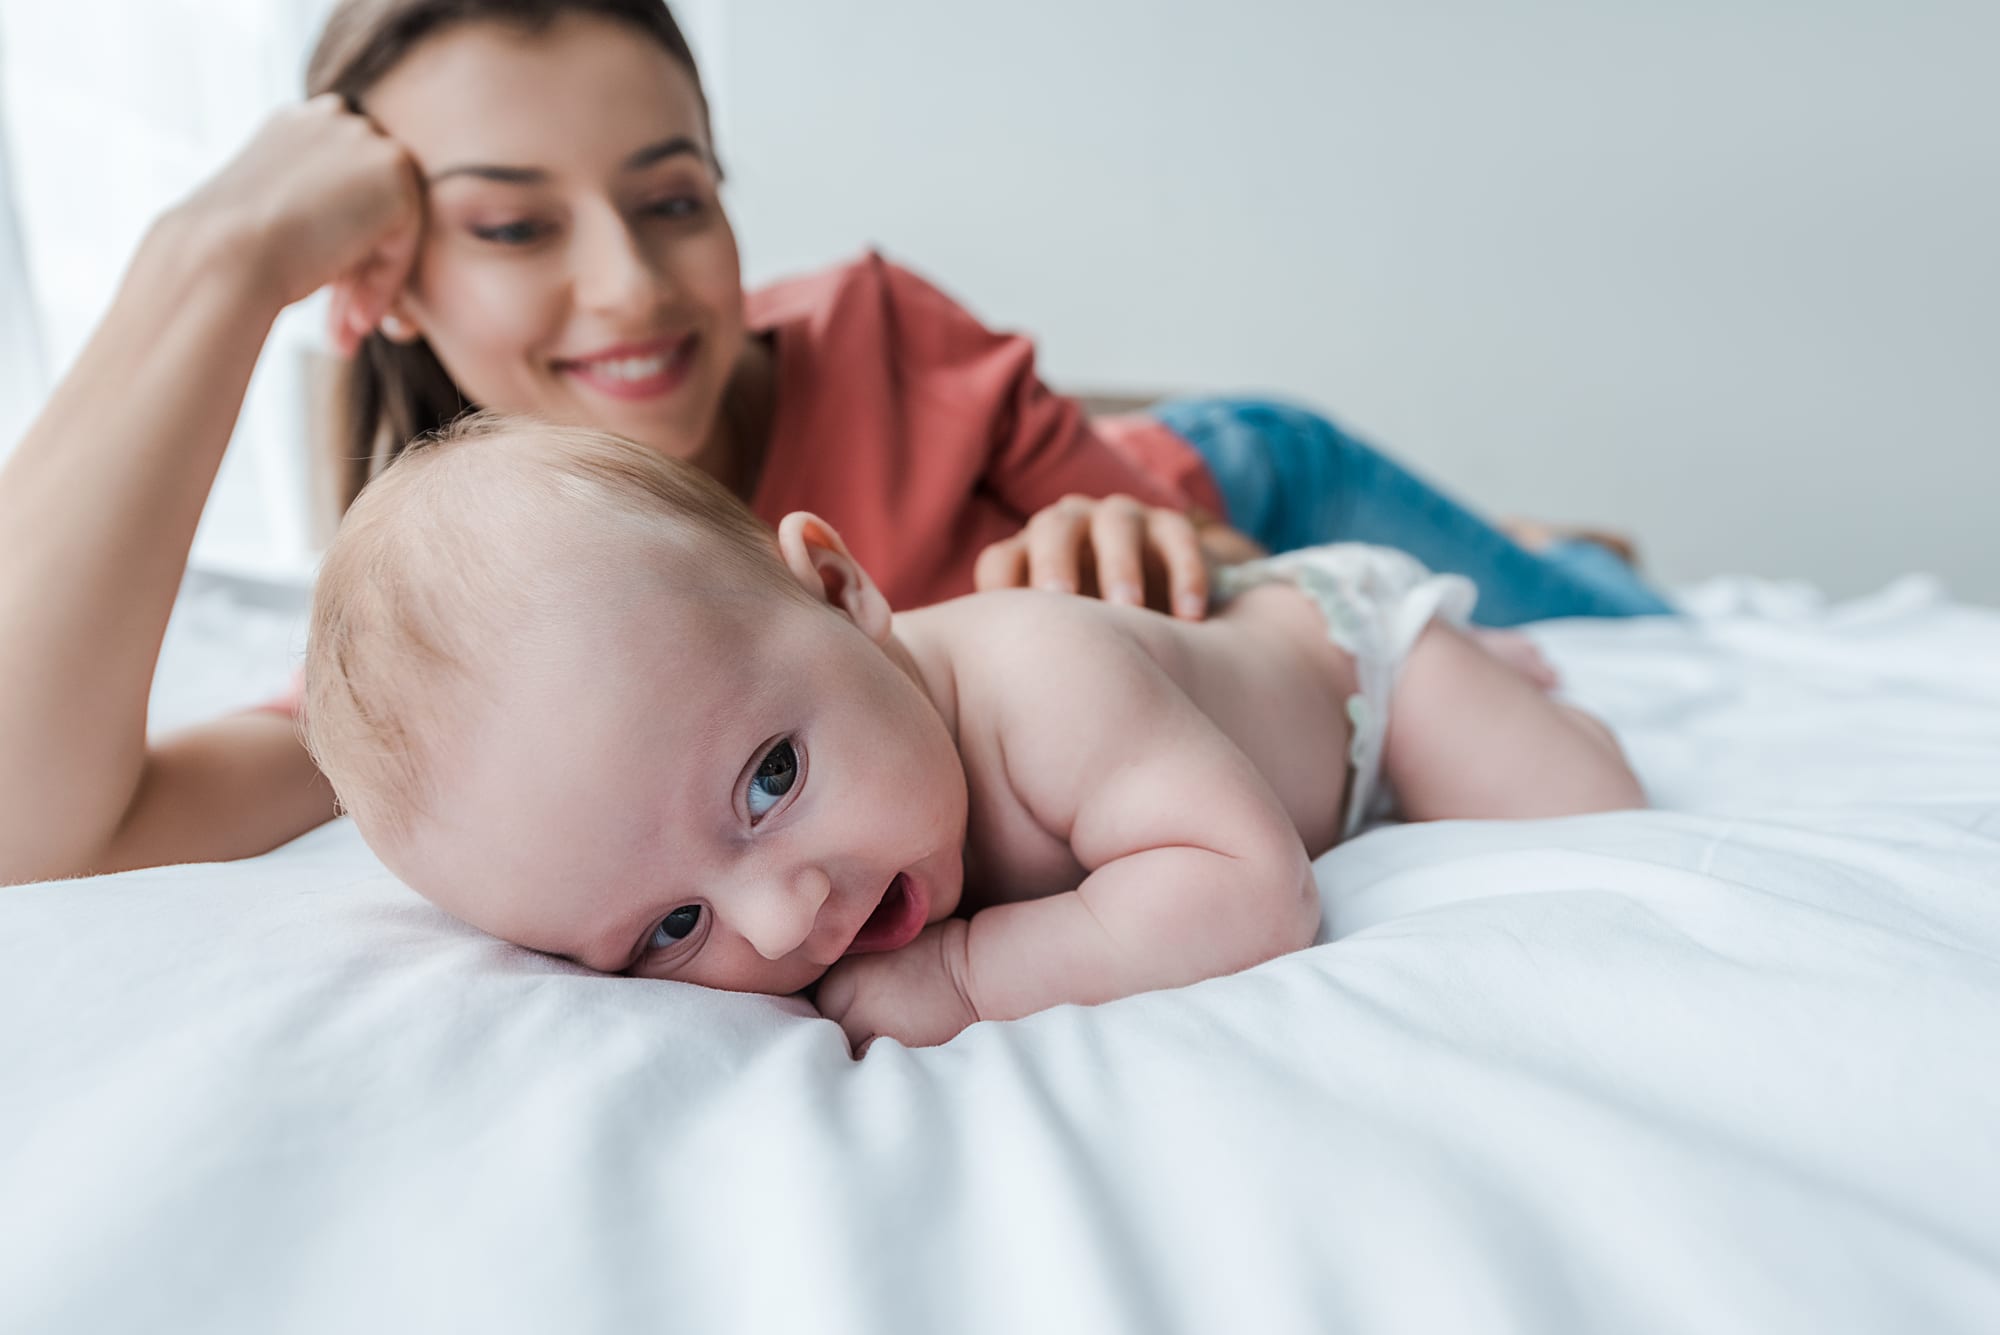 10 ways to help your baby thrive #newborncare #babycare #helpingyourbabythrive